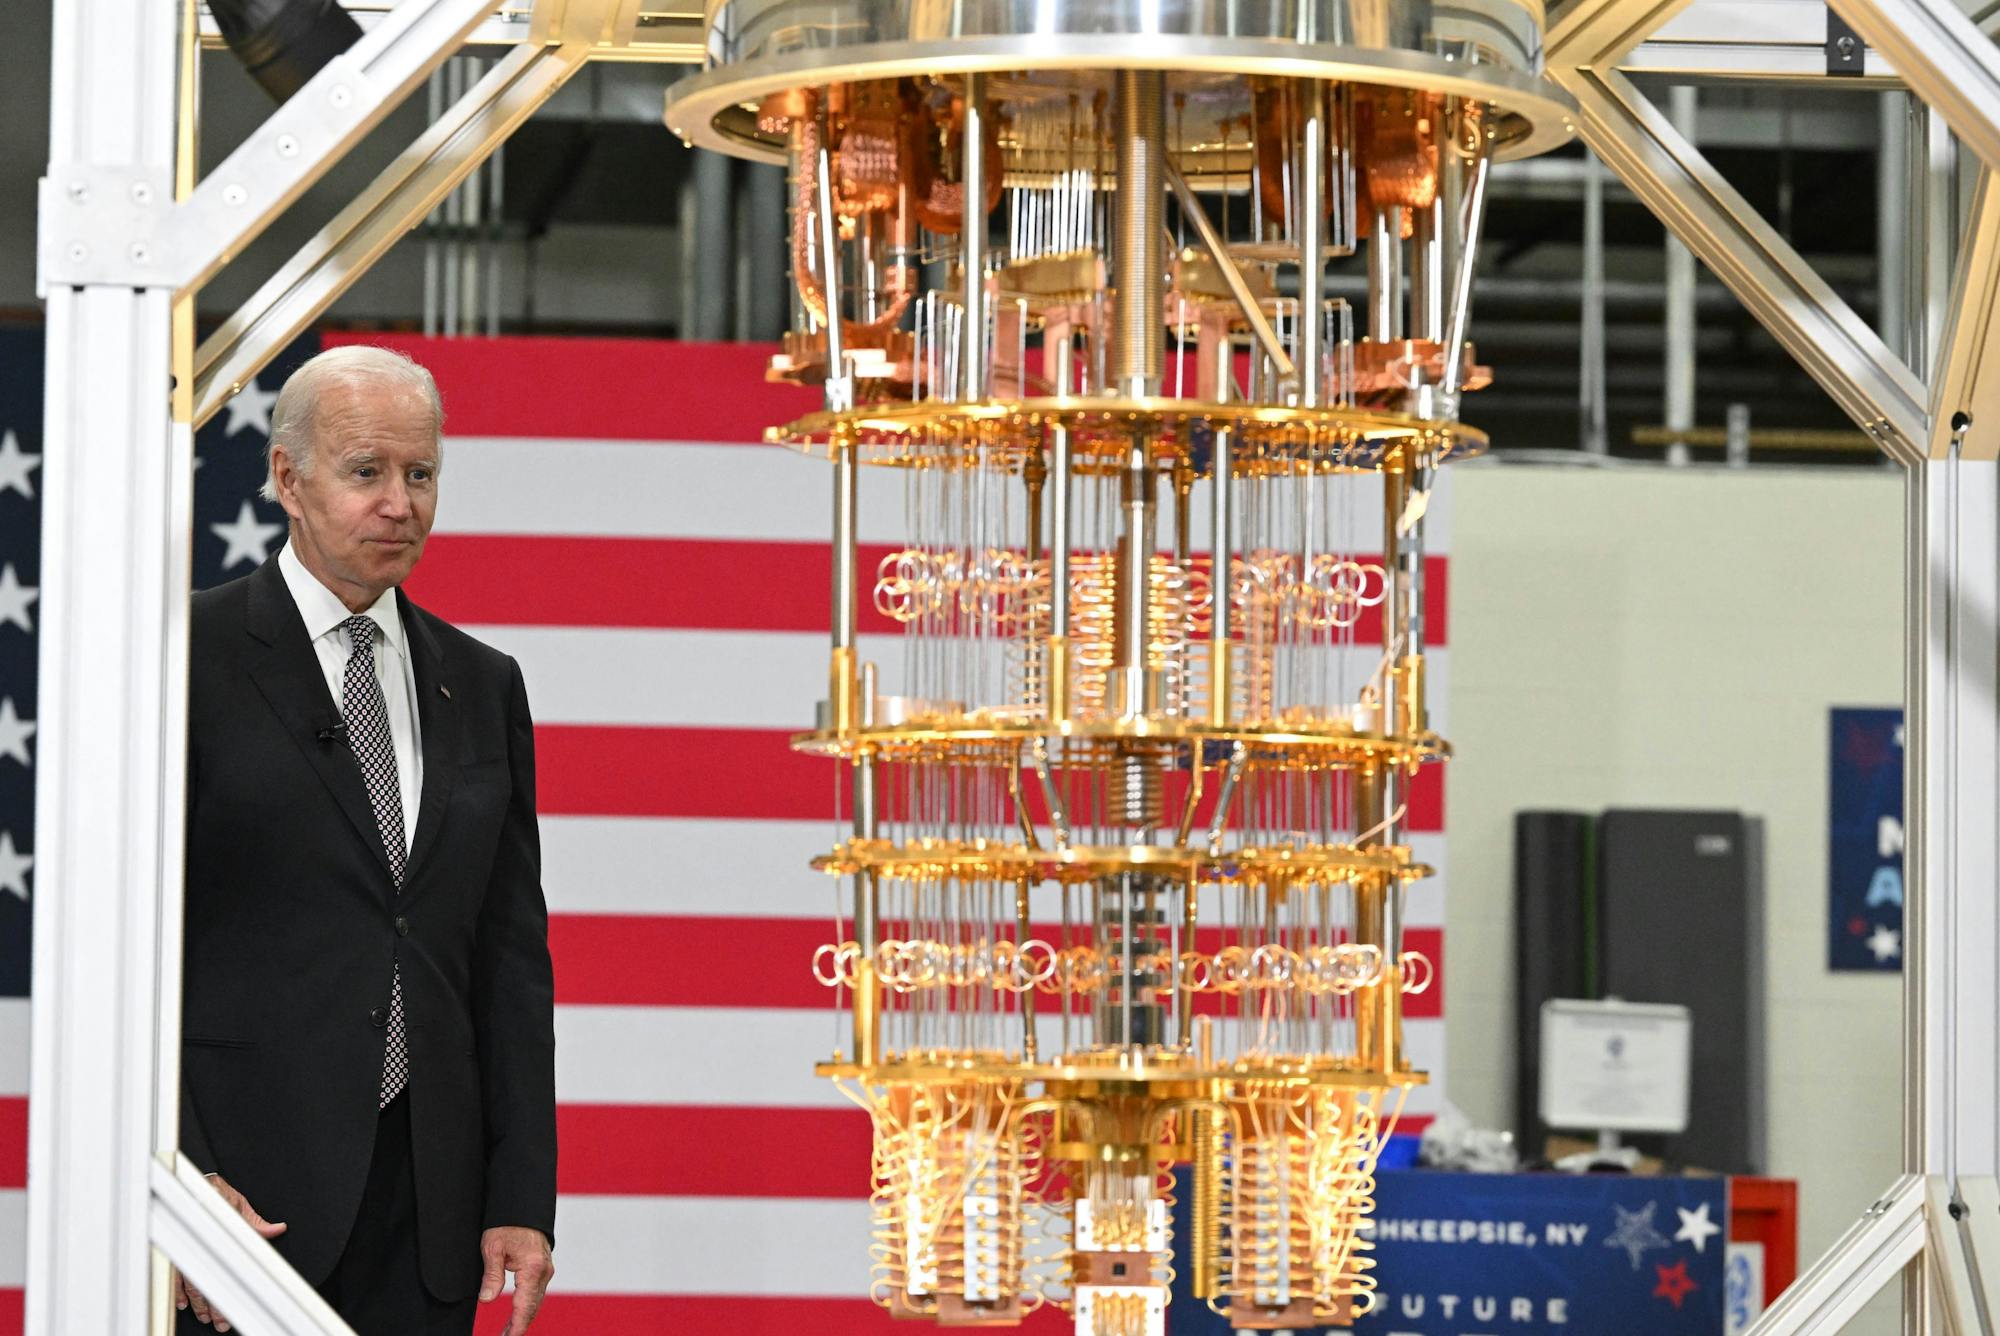 IBM's quantum computer got President Joe Biden's attention.